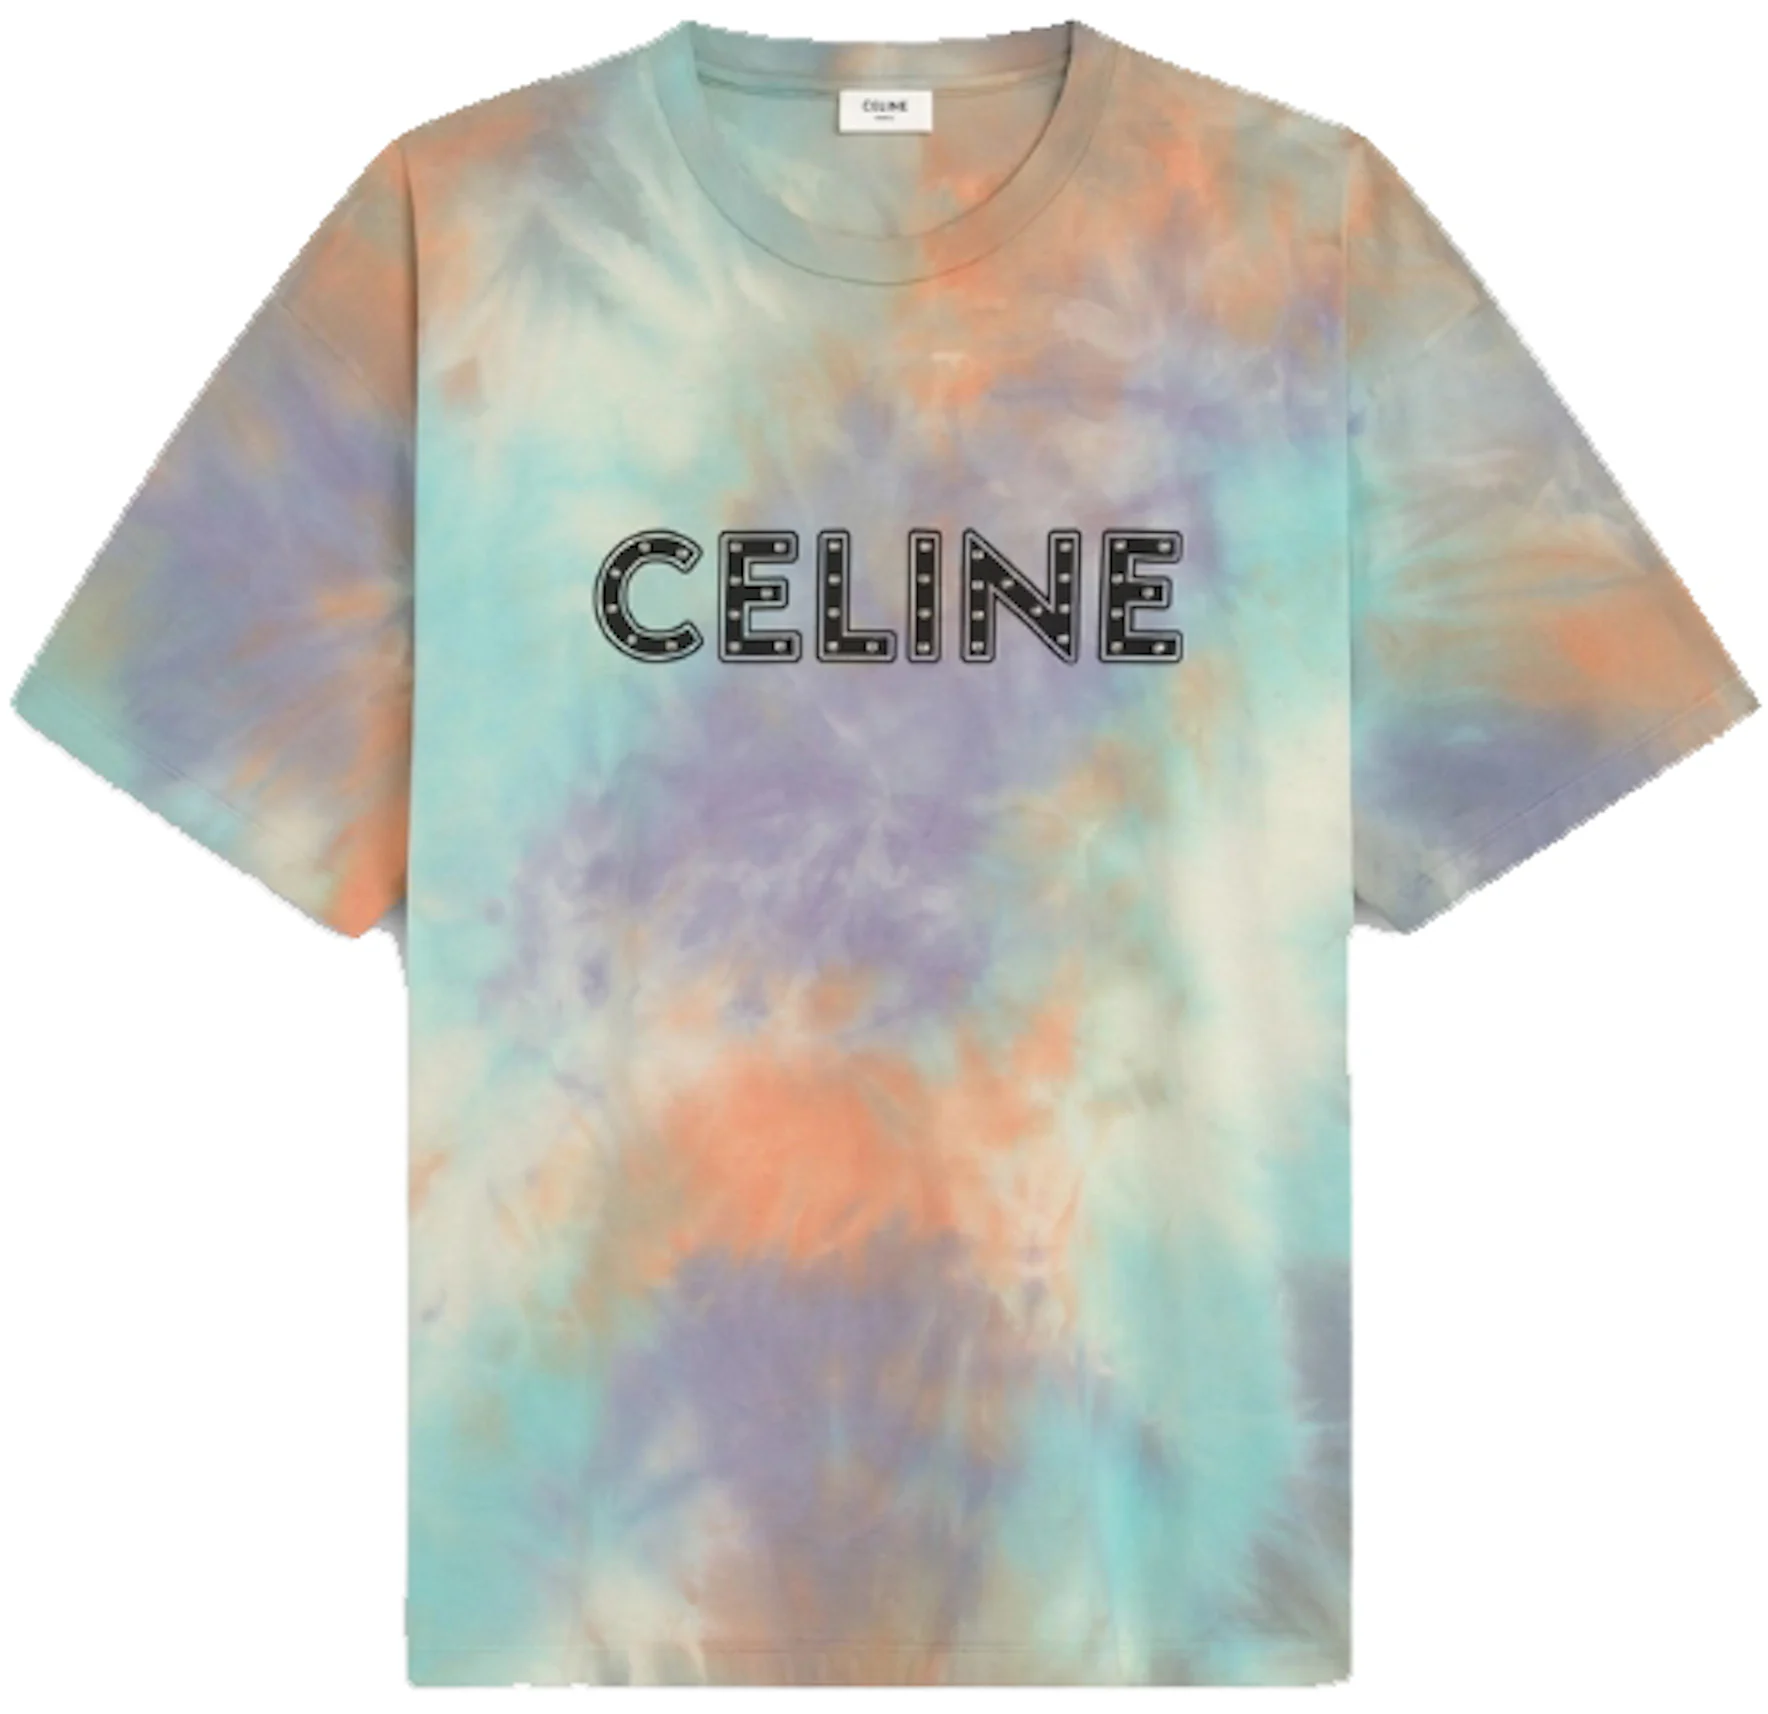 https://images.stockx.com/images/Celine-Loose-Cotton-T-Shirt-with-Studs-Multicolor.jpg?fit=fill&bg=FFFFFF&w=1200&h=857&fm=webp&auto=compress&dpr=2&trim=color&updated_at=1616049595&q=60